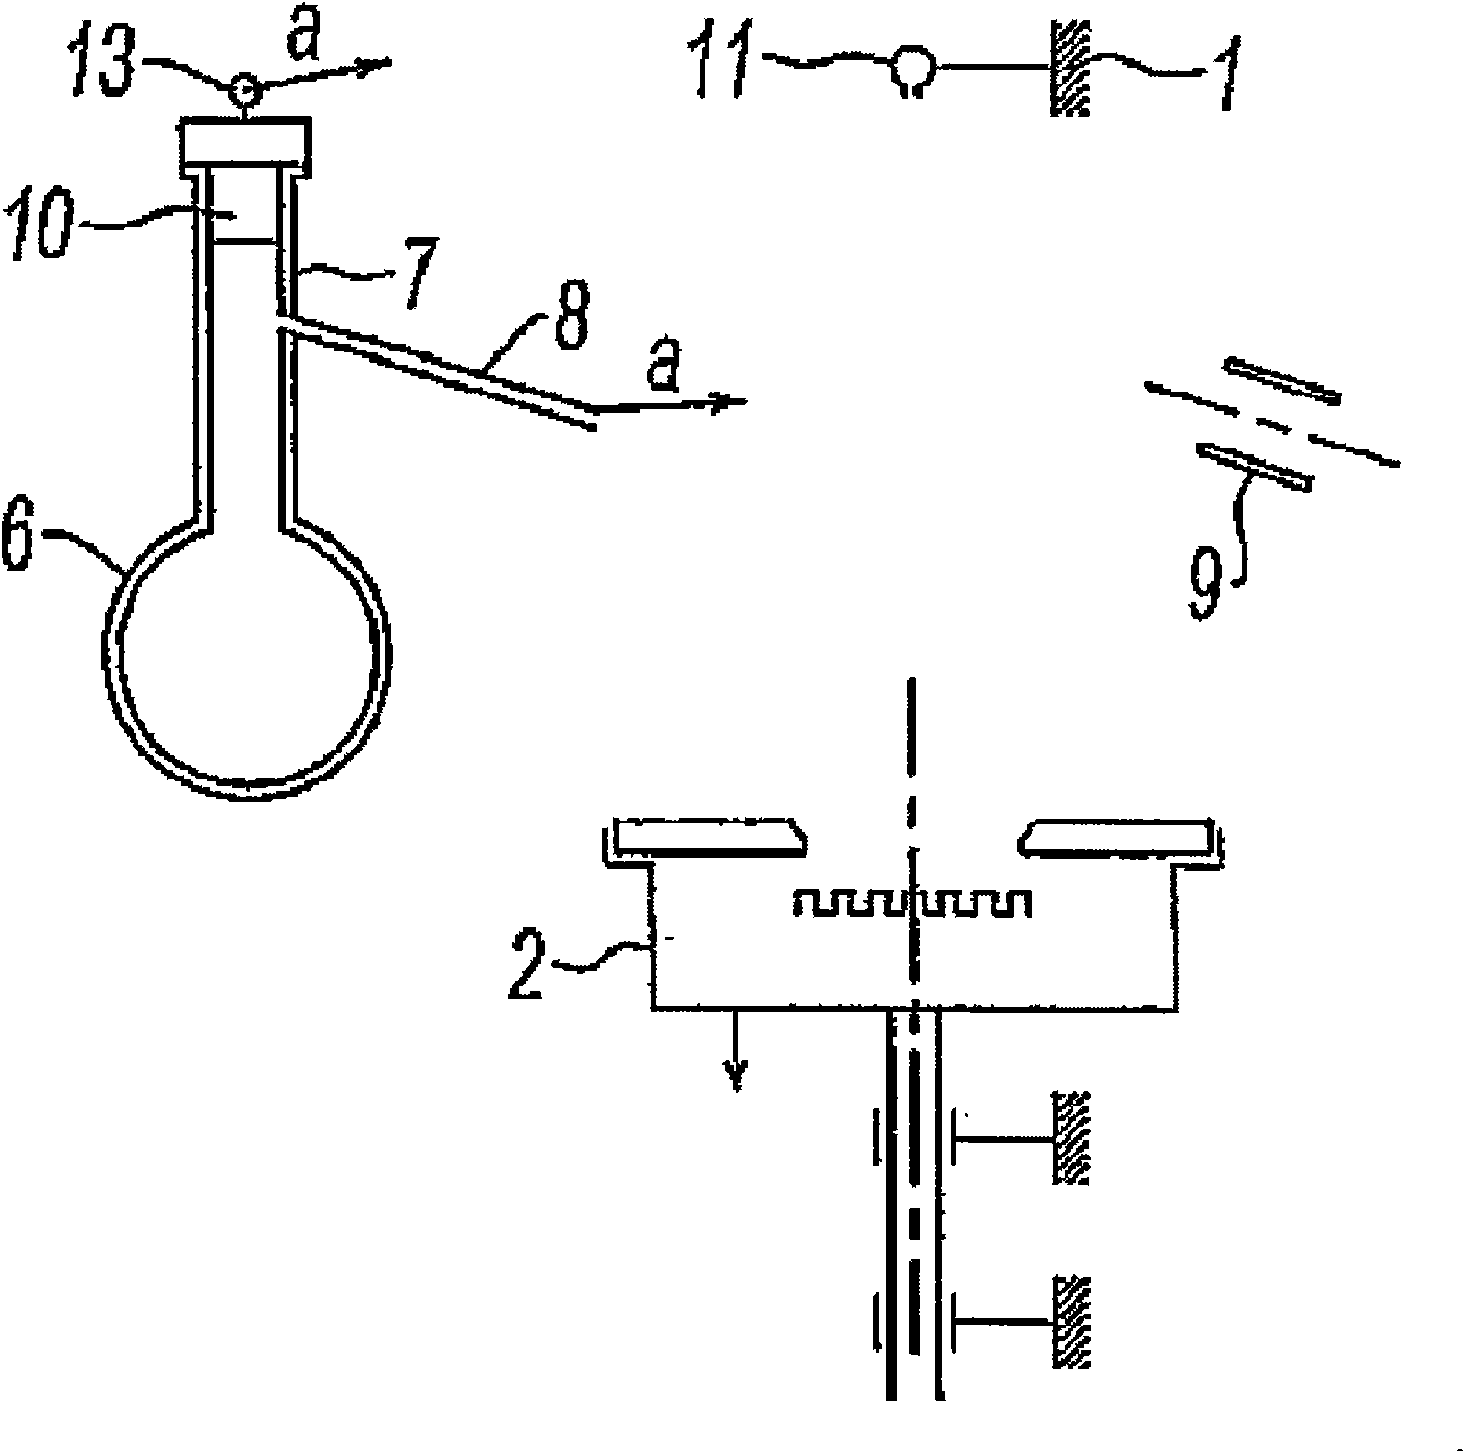 Distilling device suitable for globular distillation flask